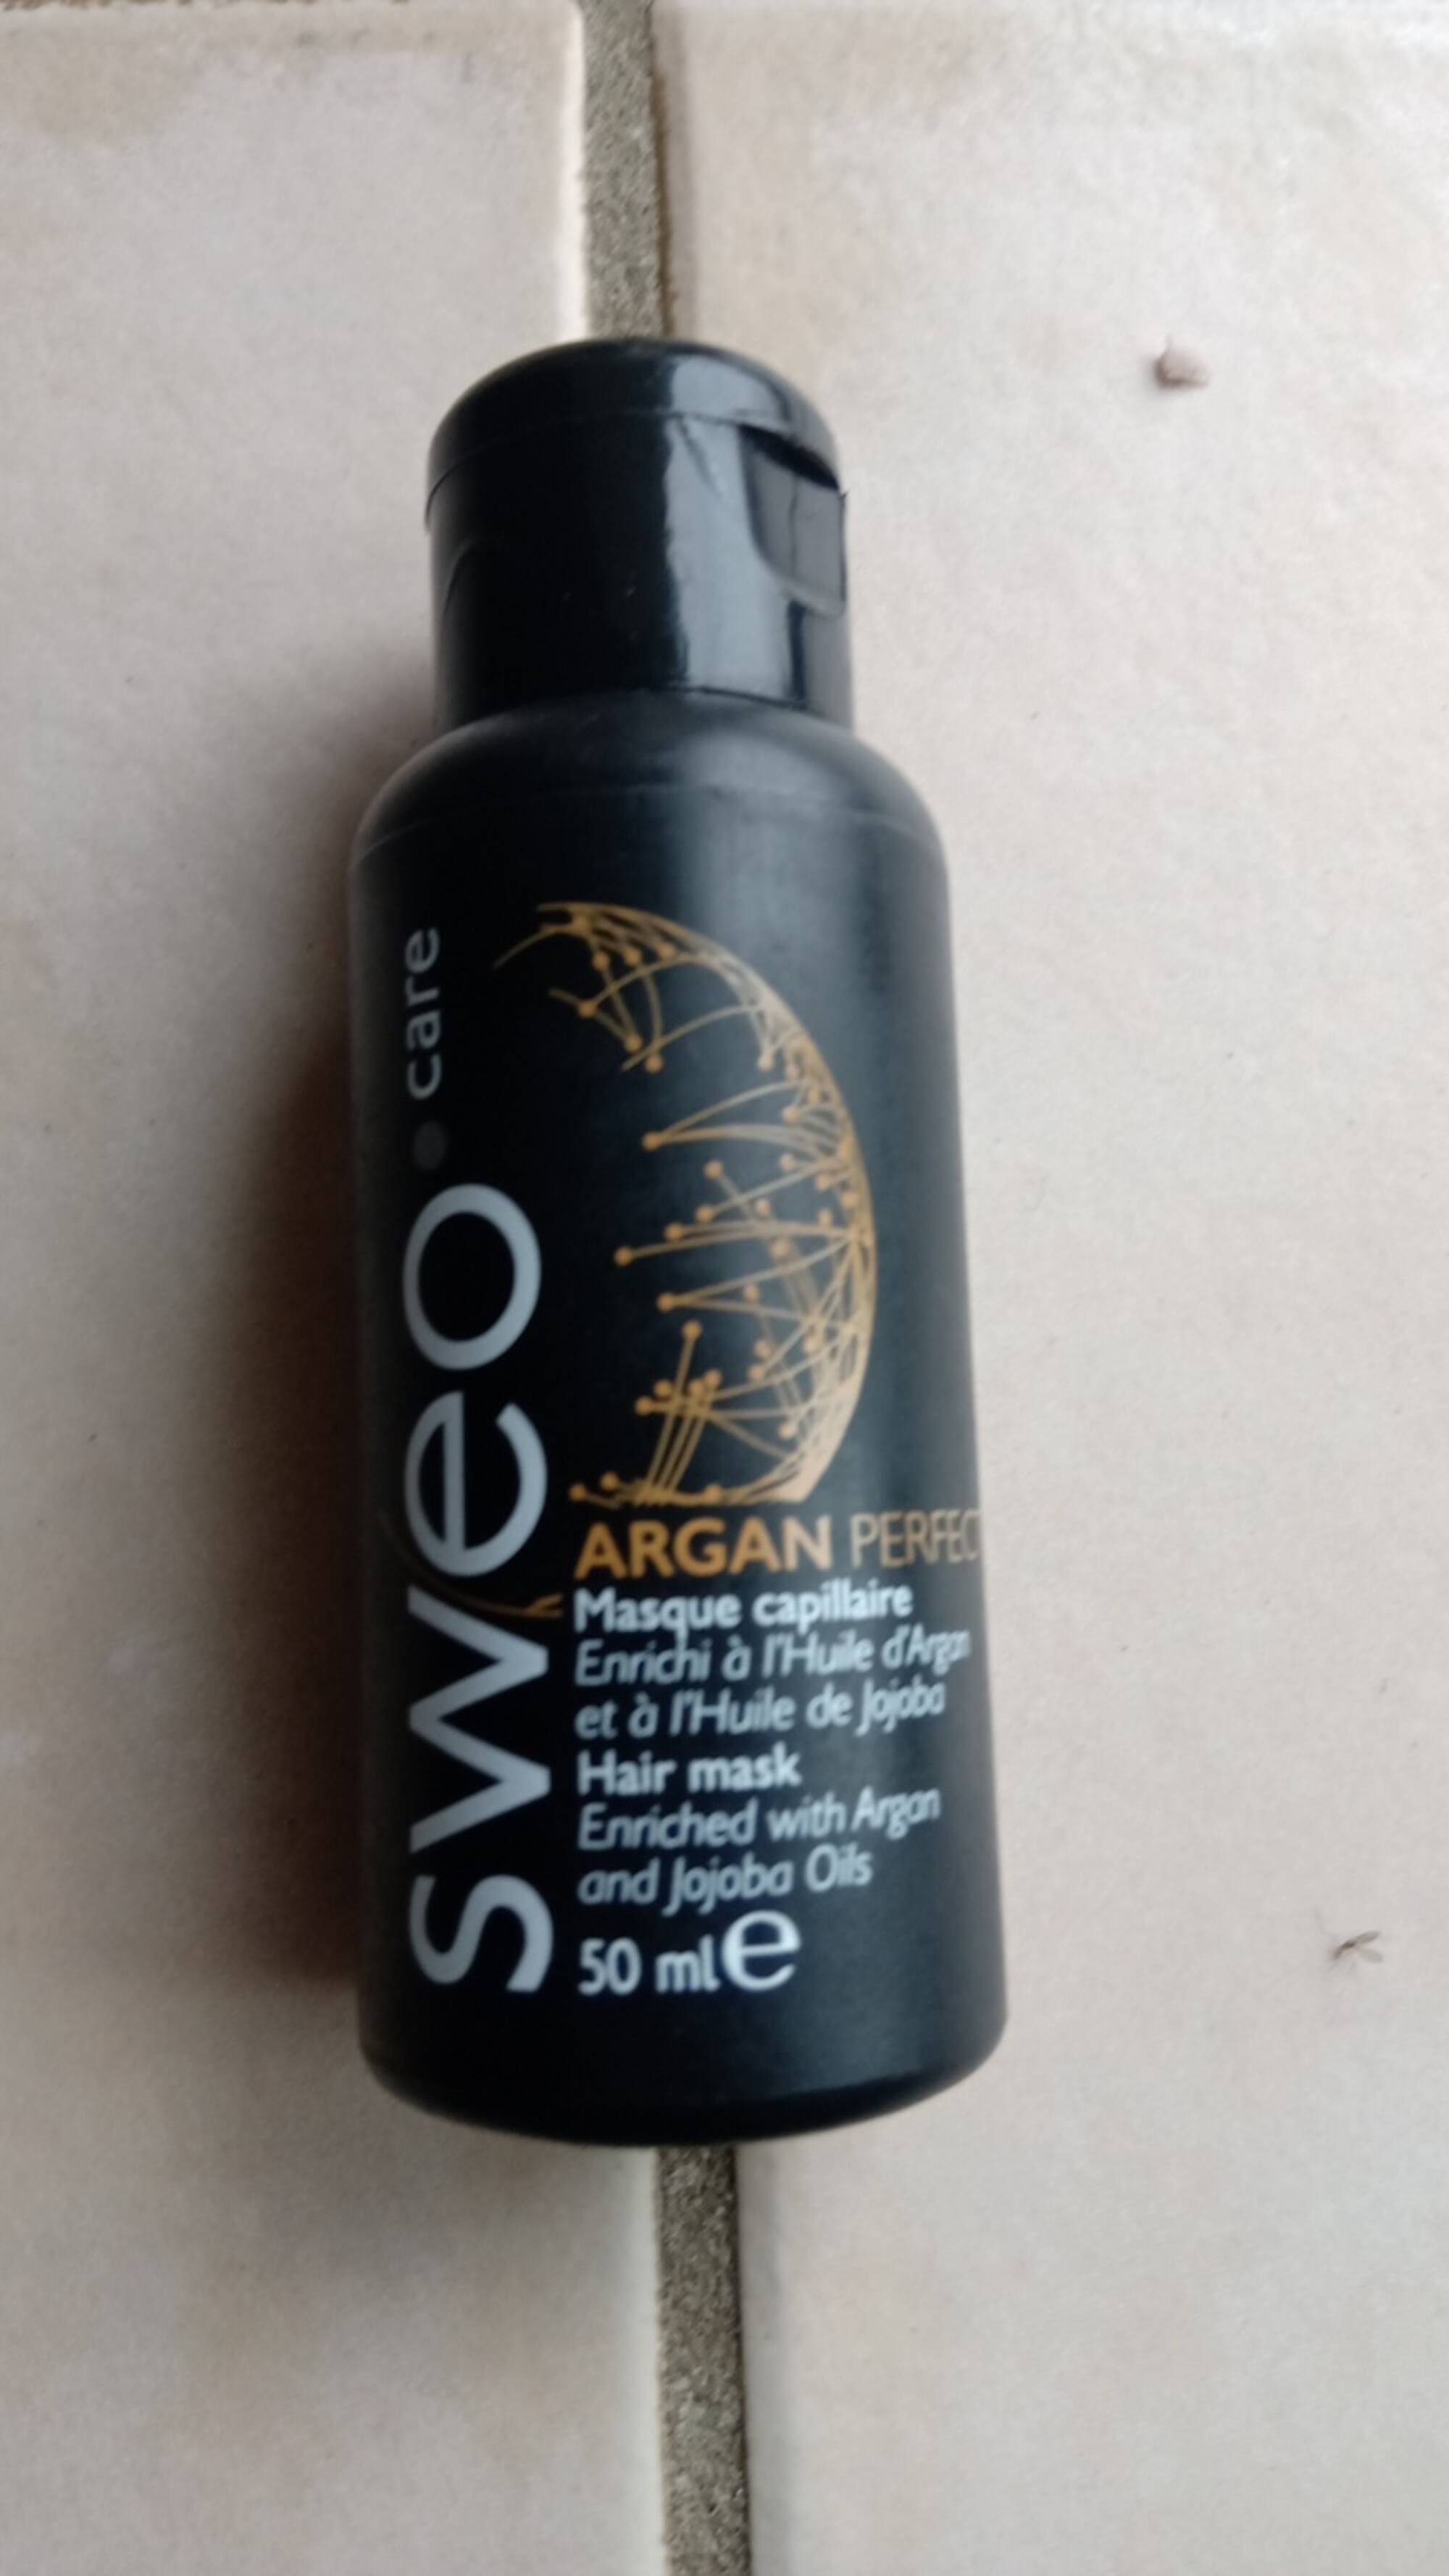 SWEO - Argan perfect - Masque capillaire 